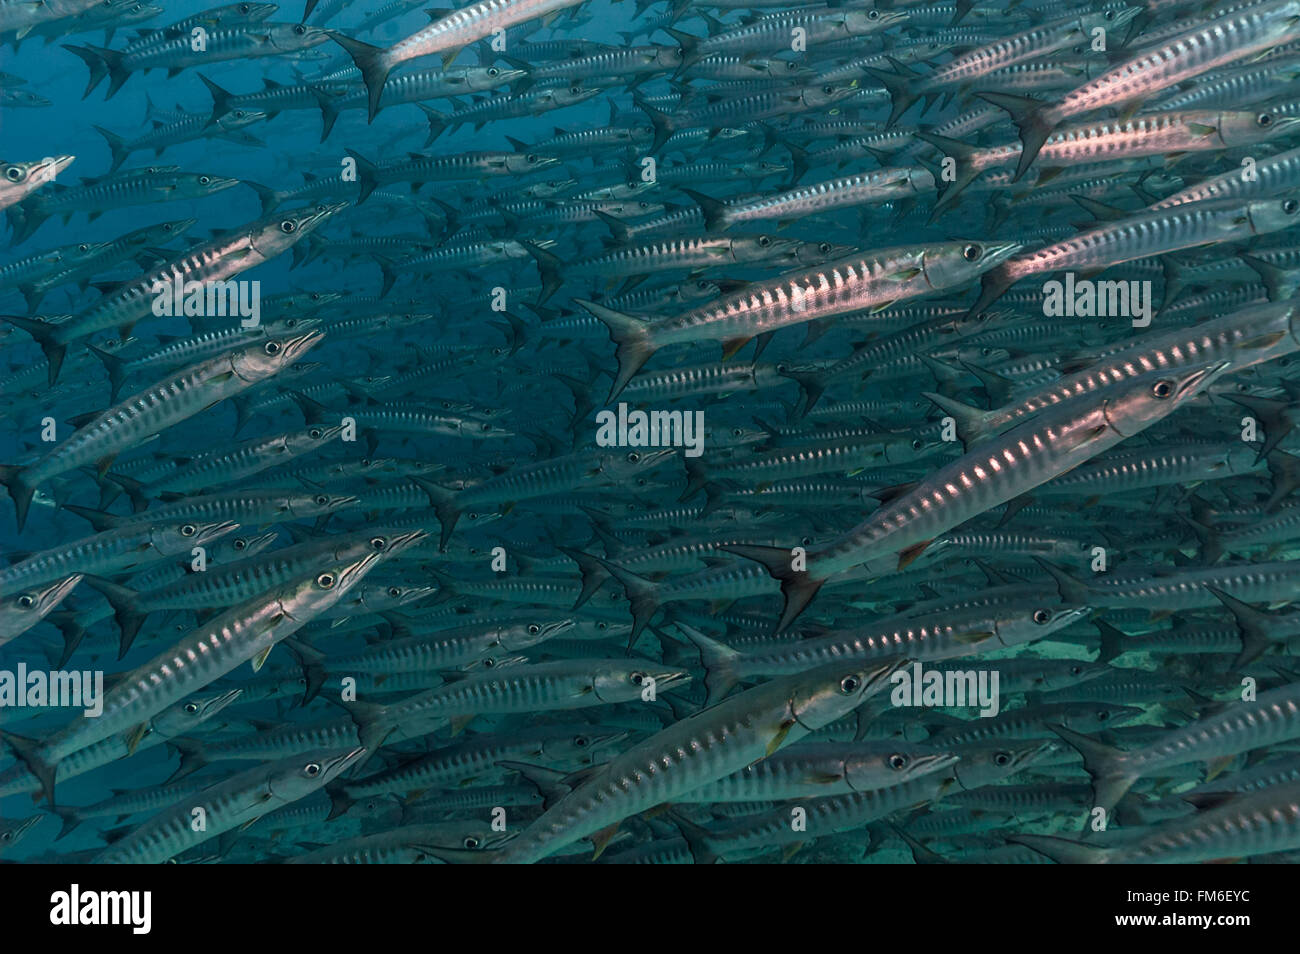 Blackfin barracuda (Sphyraena qenie) form huge shoals in tropical waters. Sudan, Red Sea, December. Stock Photo